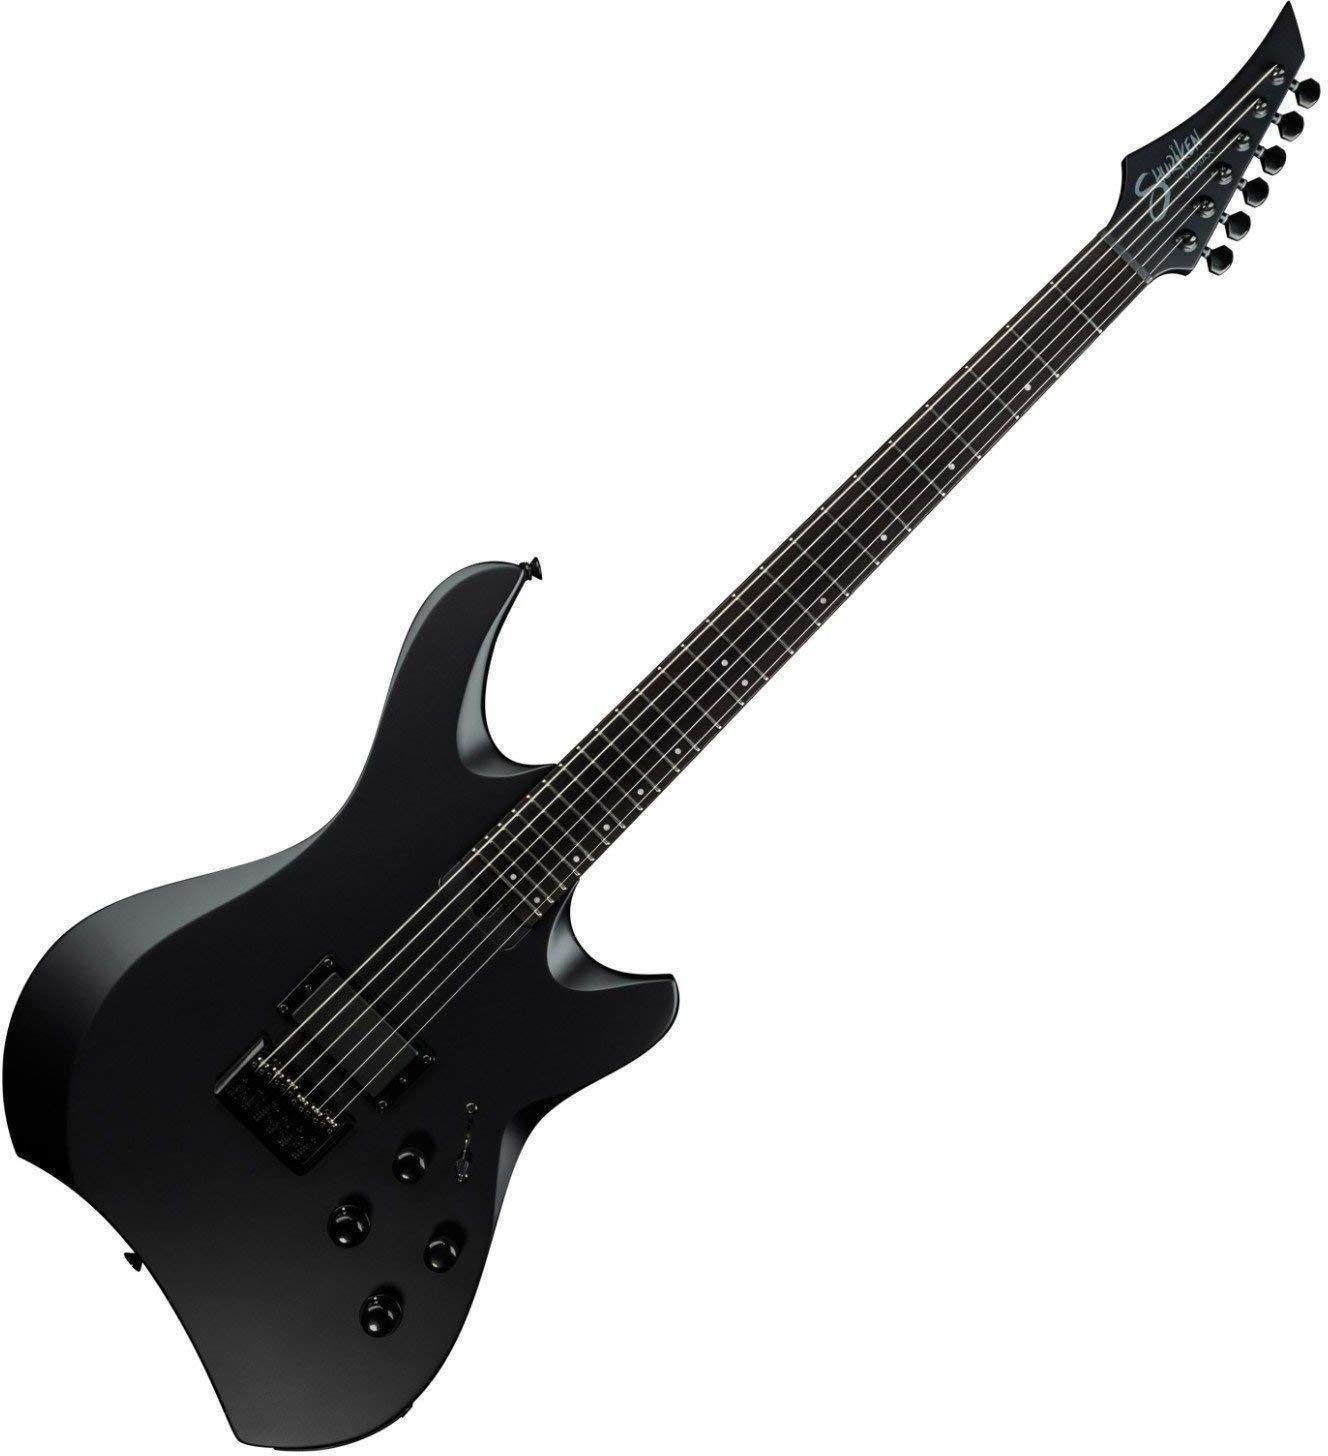 Guitarra elétrica Line6 Shuriken Variax SR270